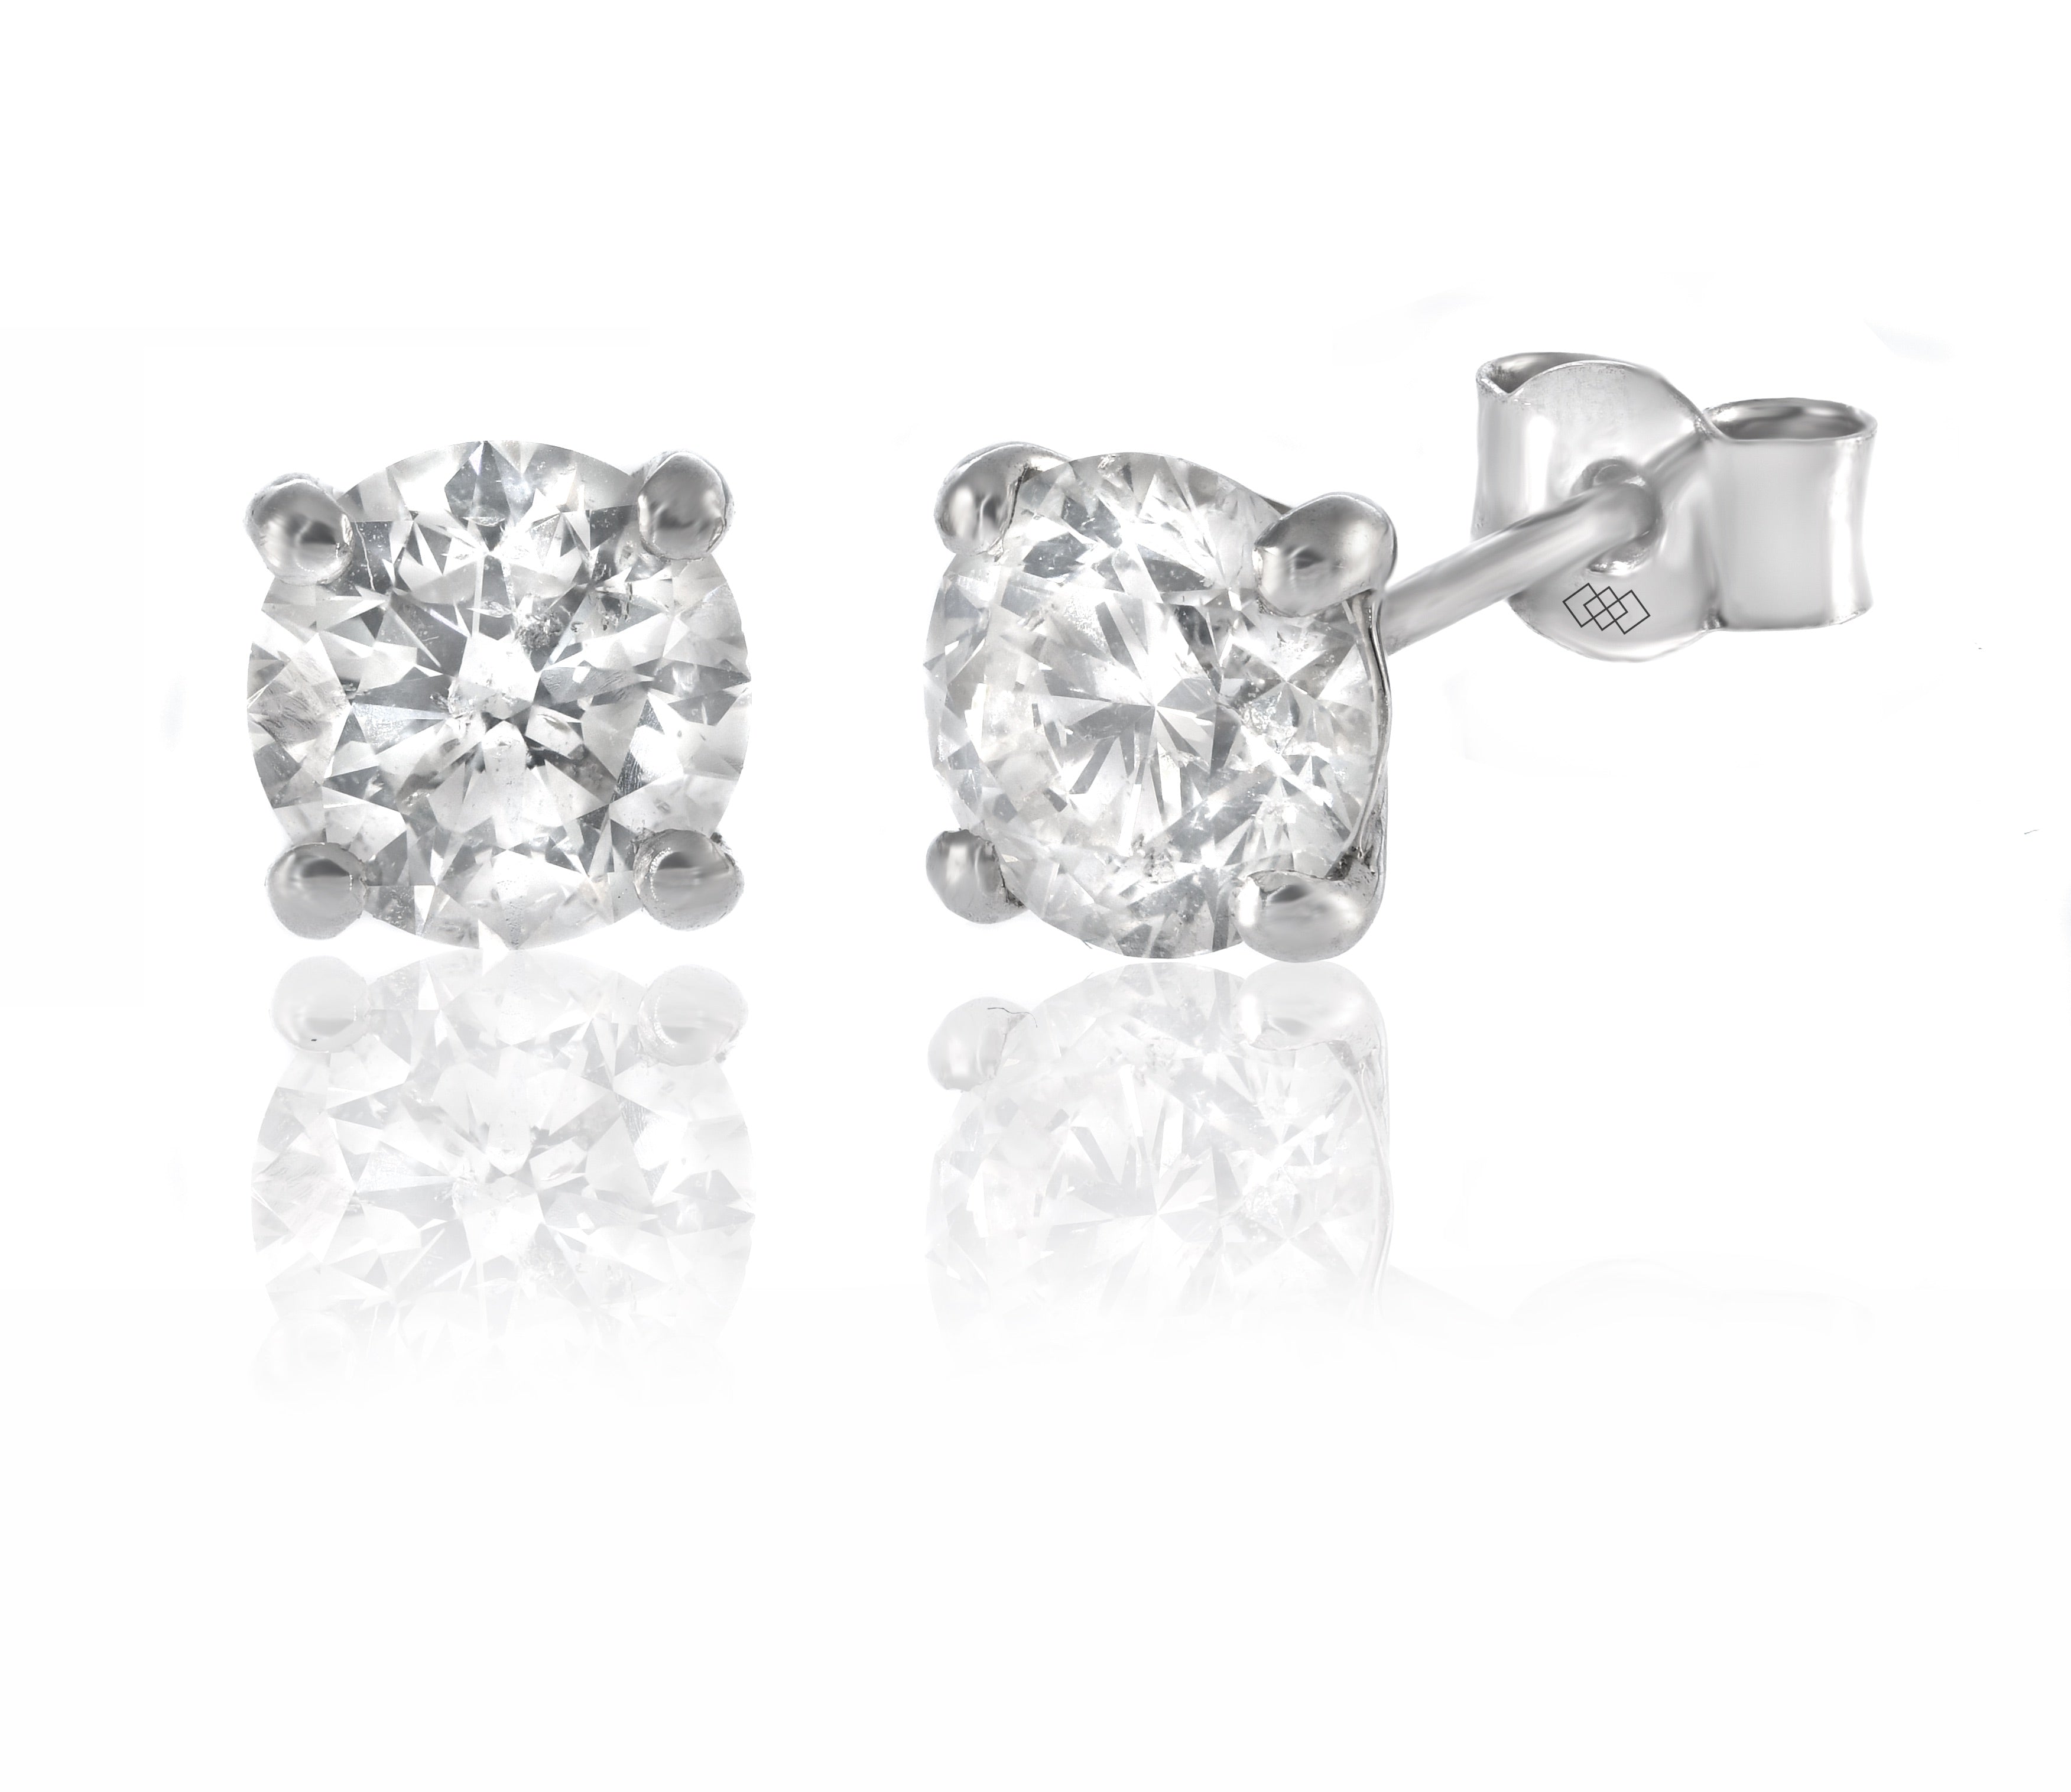 Earrings - Round Brilliant Cut Diamond Stud Earrings